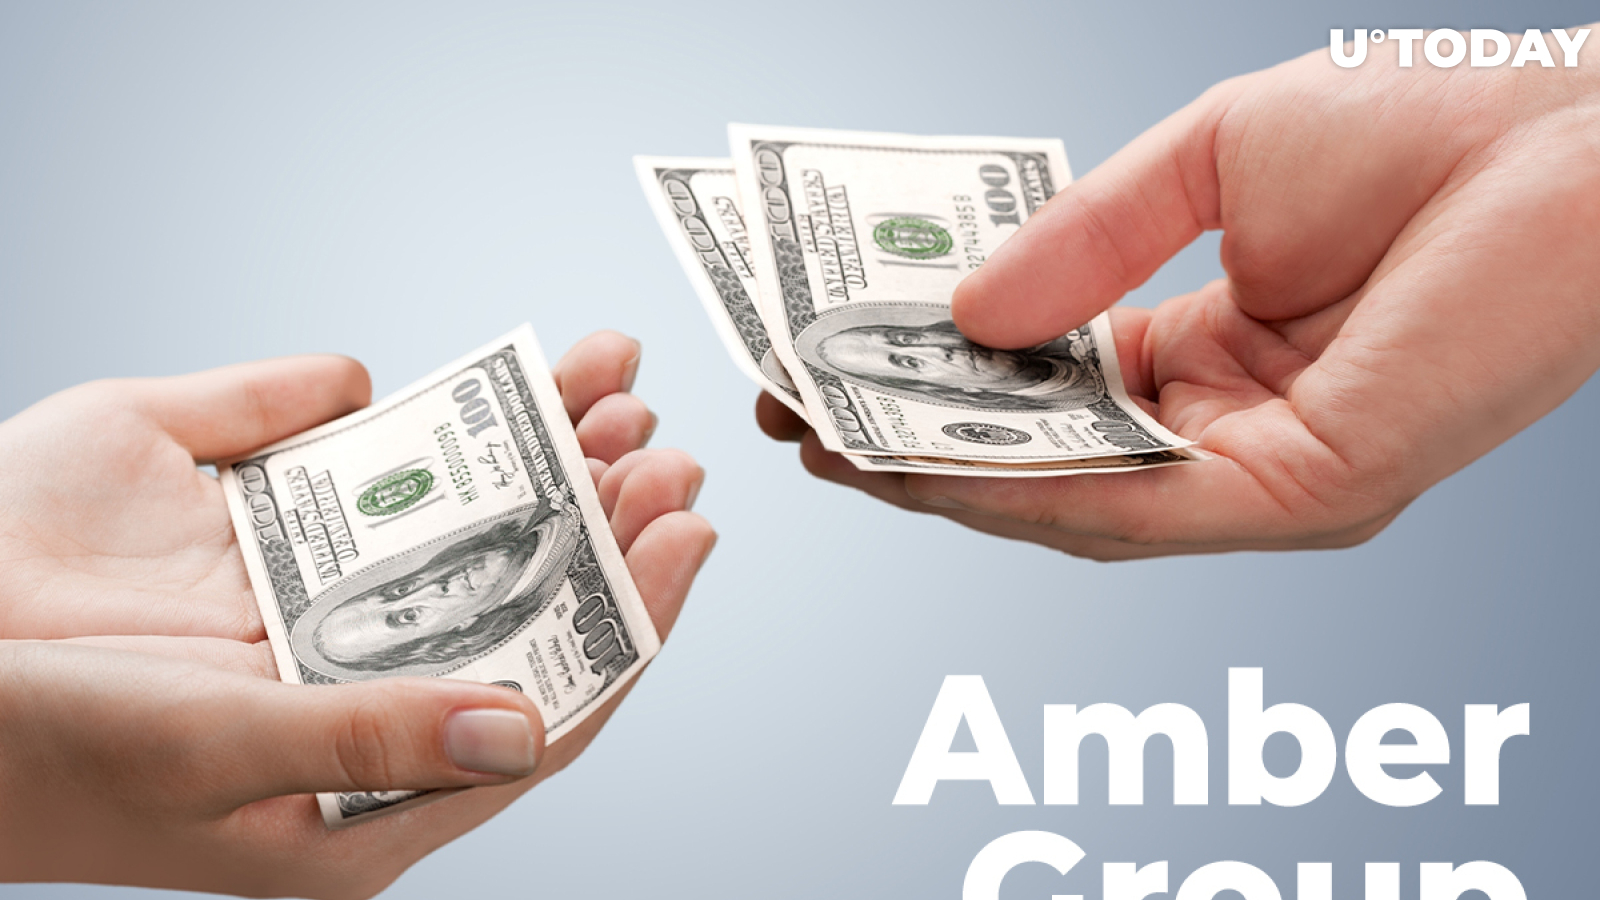 Amber Group Net Sum of Interest Paid Surpasses $65 Million